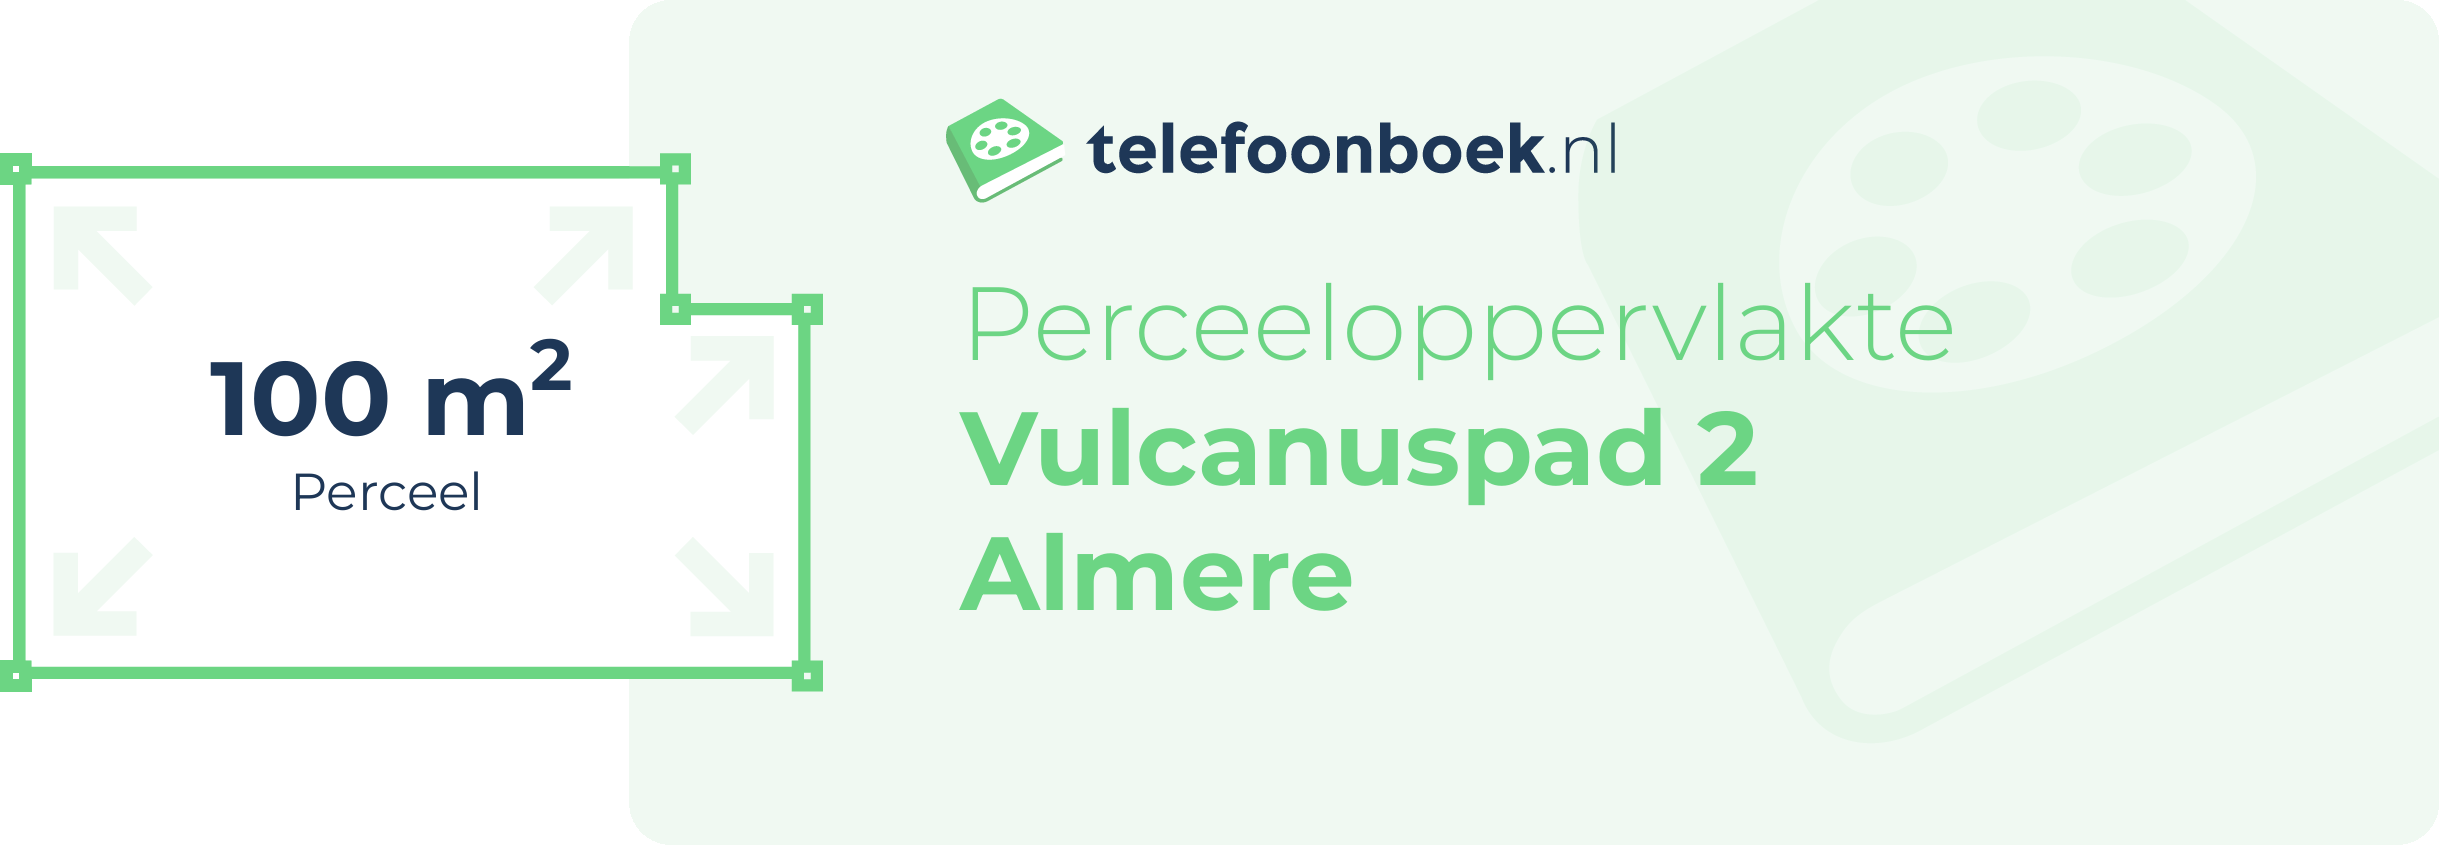 Perceeloppervlakte Vulcanuspad 2 Almere